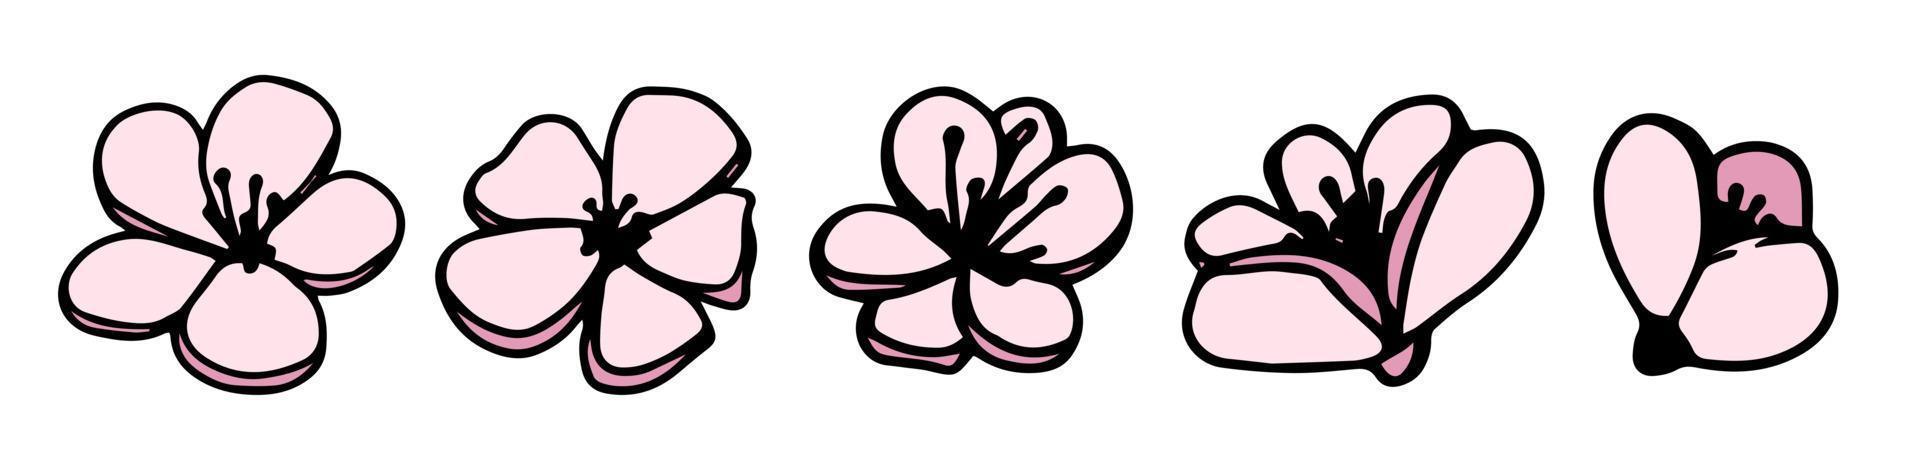 vektor set silhuetter av fem handritade rosa magnolia blommor isolerad på vit bakgrund. vektor illustration. blommor våren doodle, illustrationer